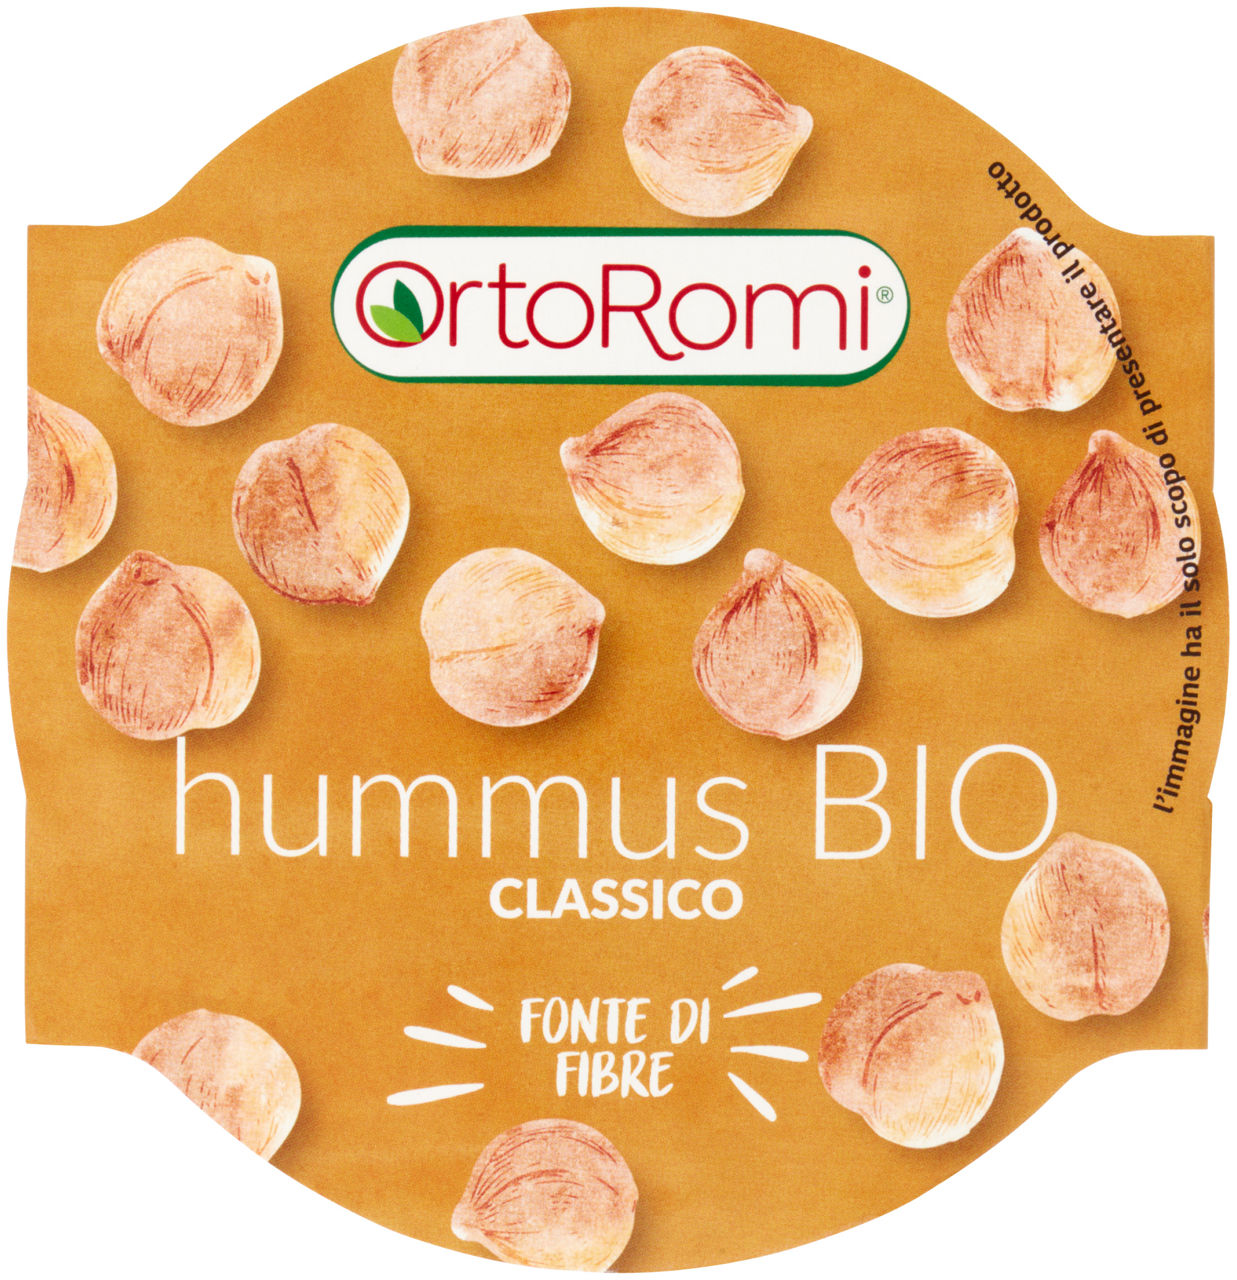 Hummus bio classico 150g